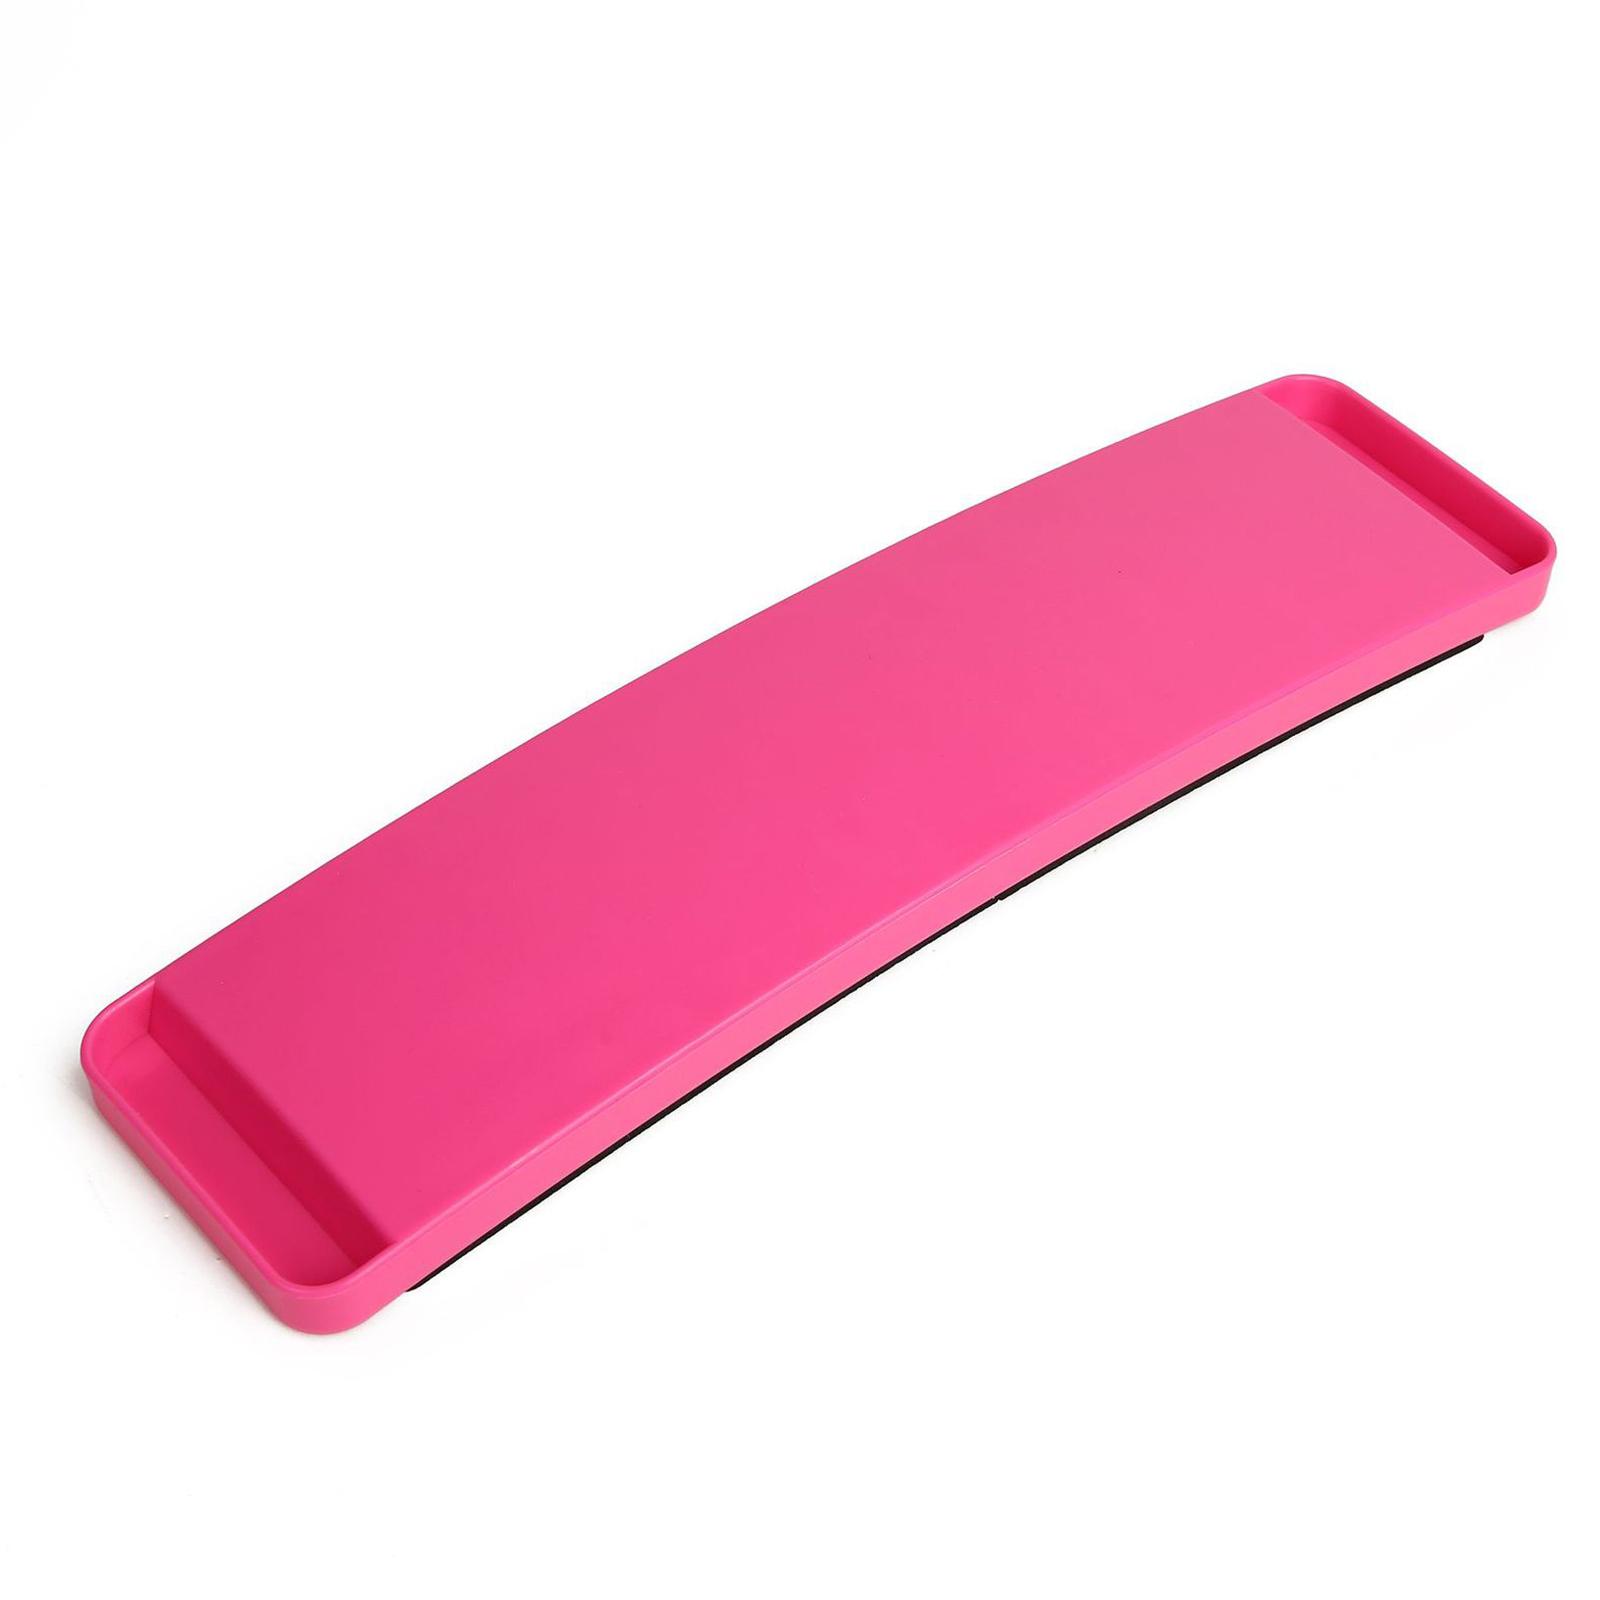 Premium Portable Ballet Turning Board for Dancers Gymnasts Pink